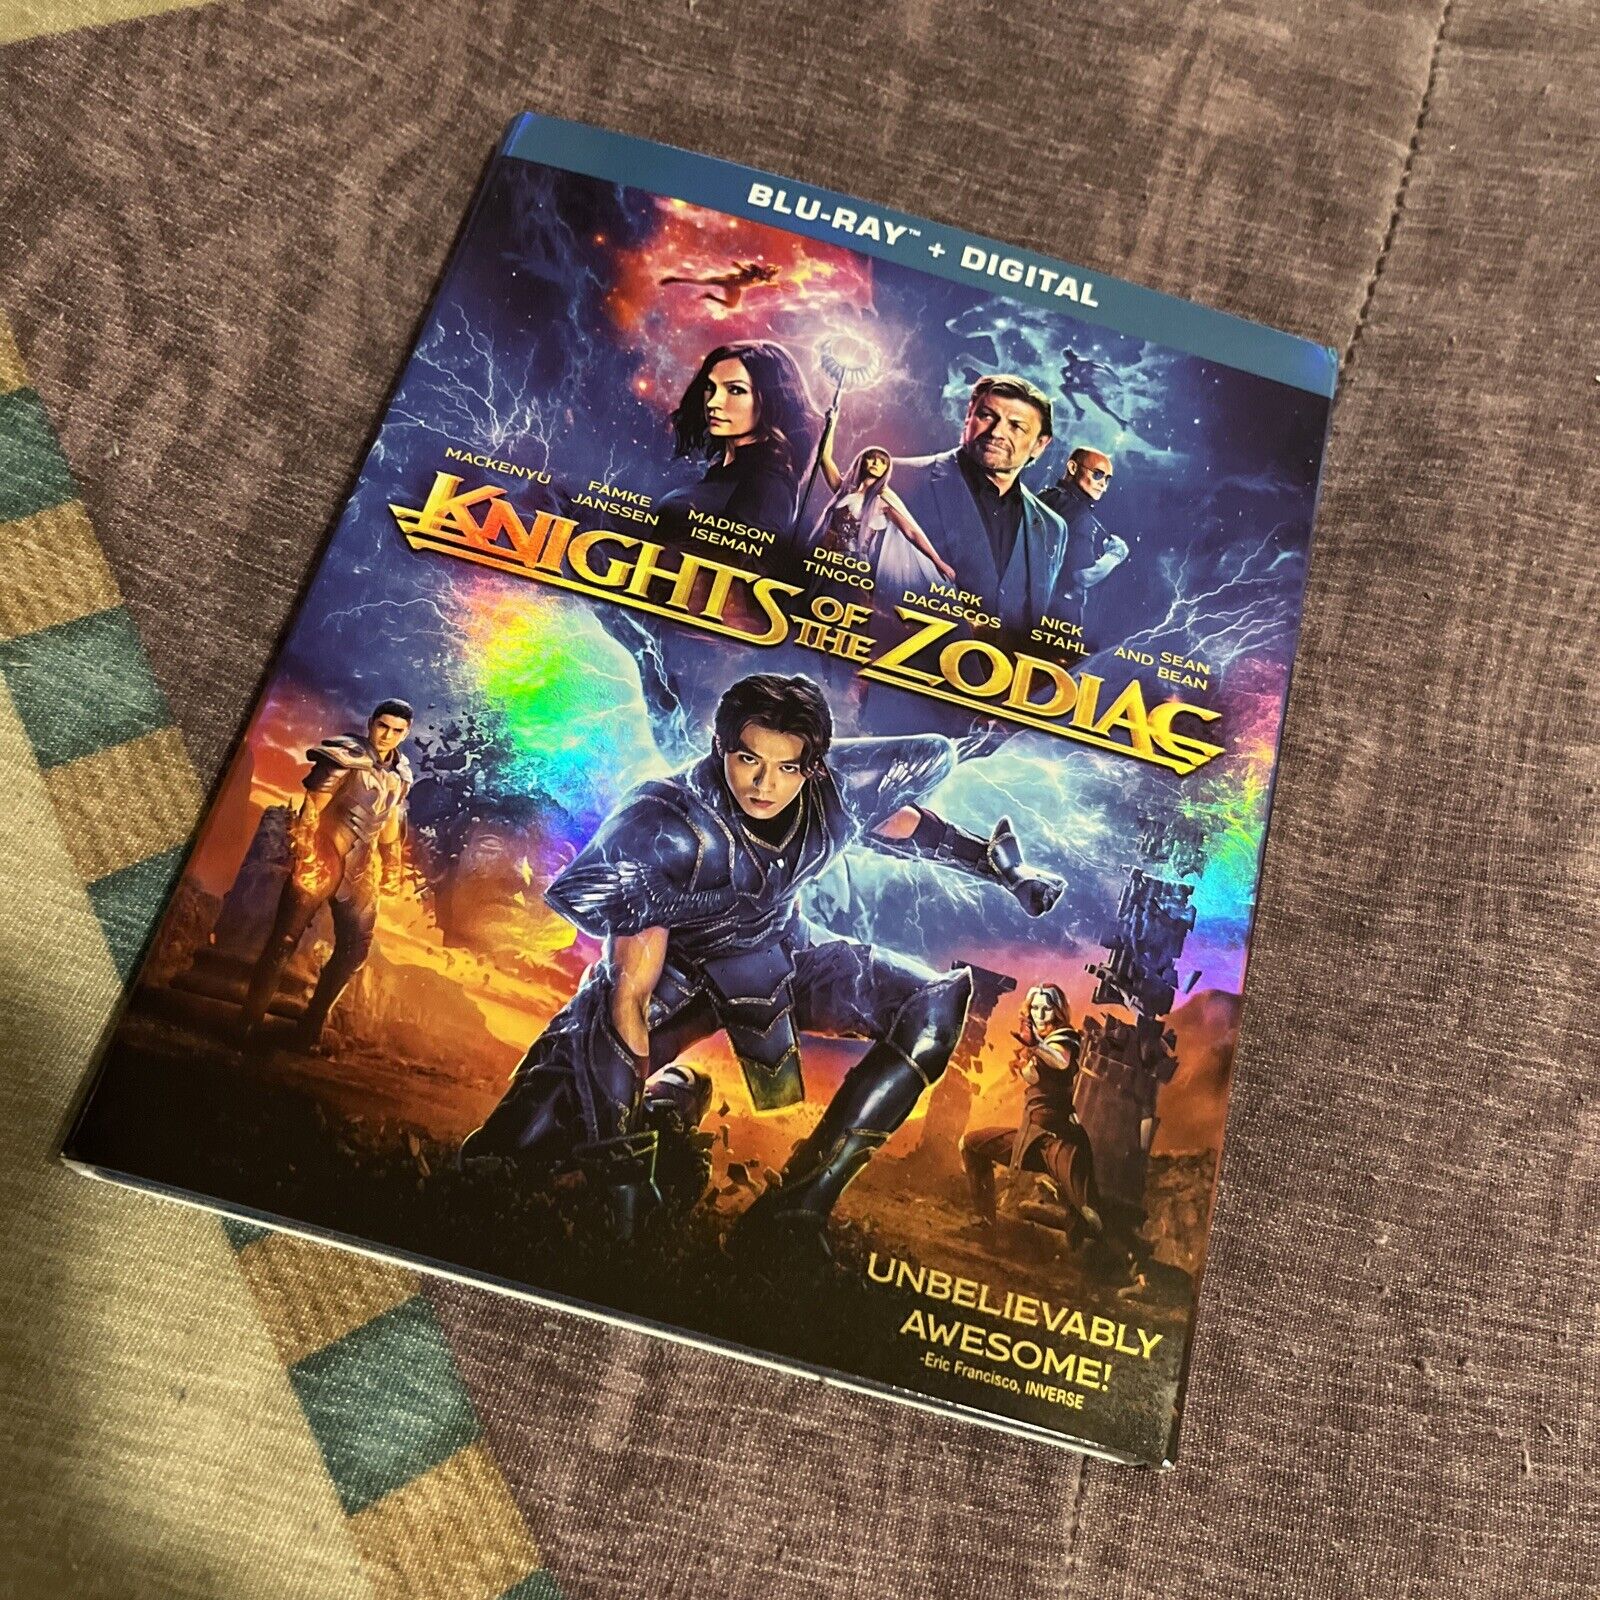 Os Cavaleiros do Zodíaco - Saint Seiya O Começo (2023) Blu-ray